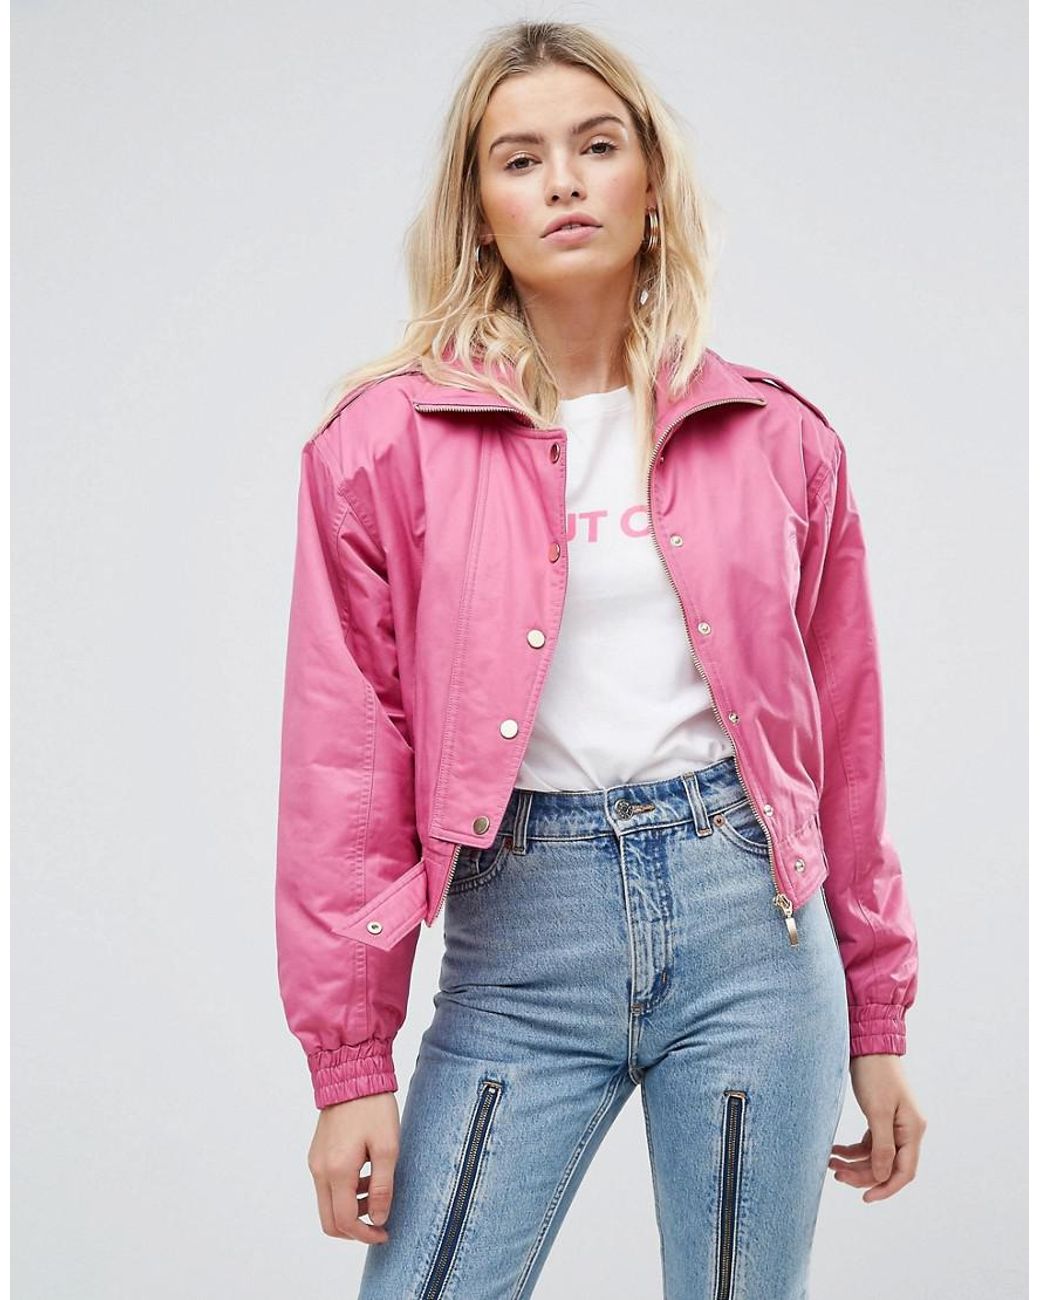 Бомбер женский розовый. 80s Jacket. Бомбер Асос женский розовый кожаный. Бомбер 80-х. Куртка в стиле 80-х.